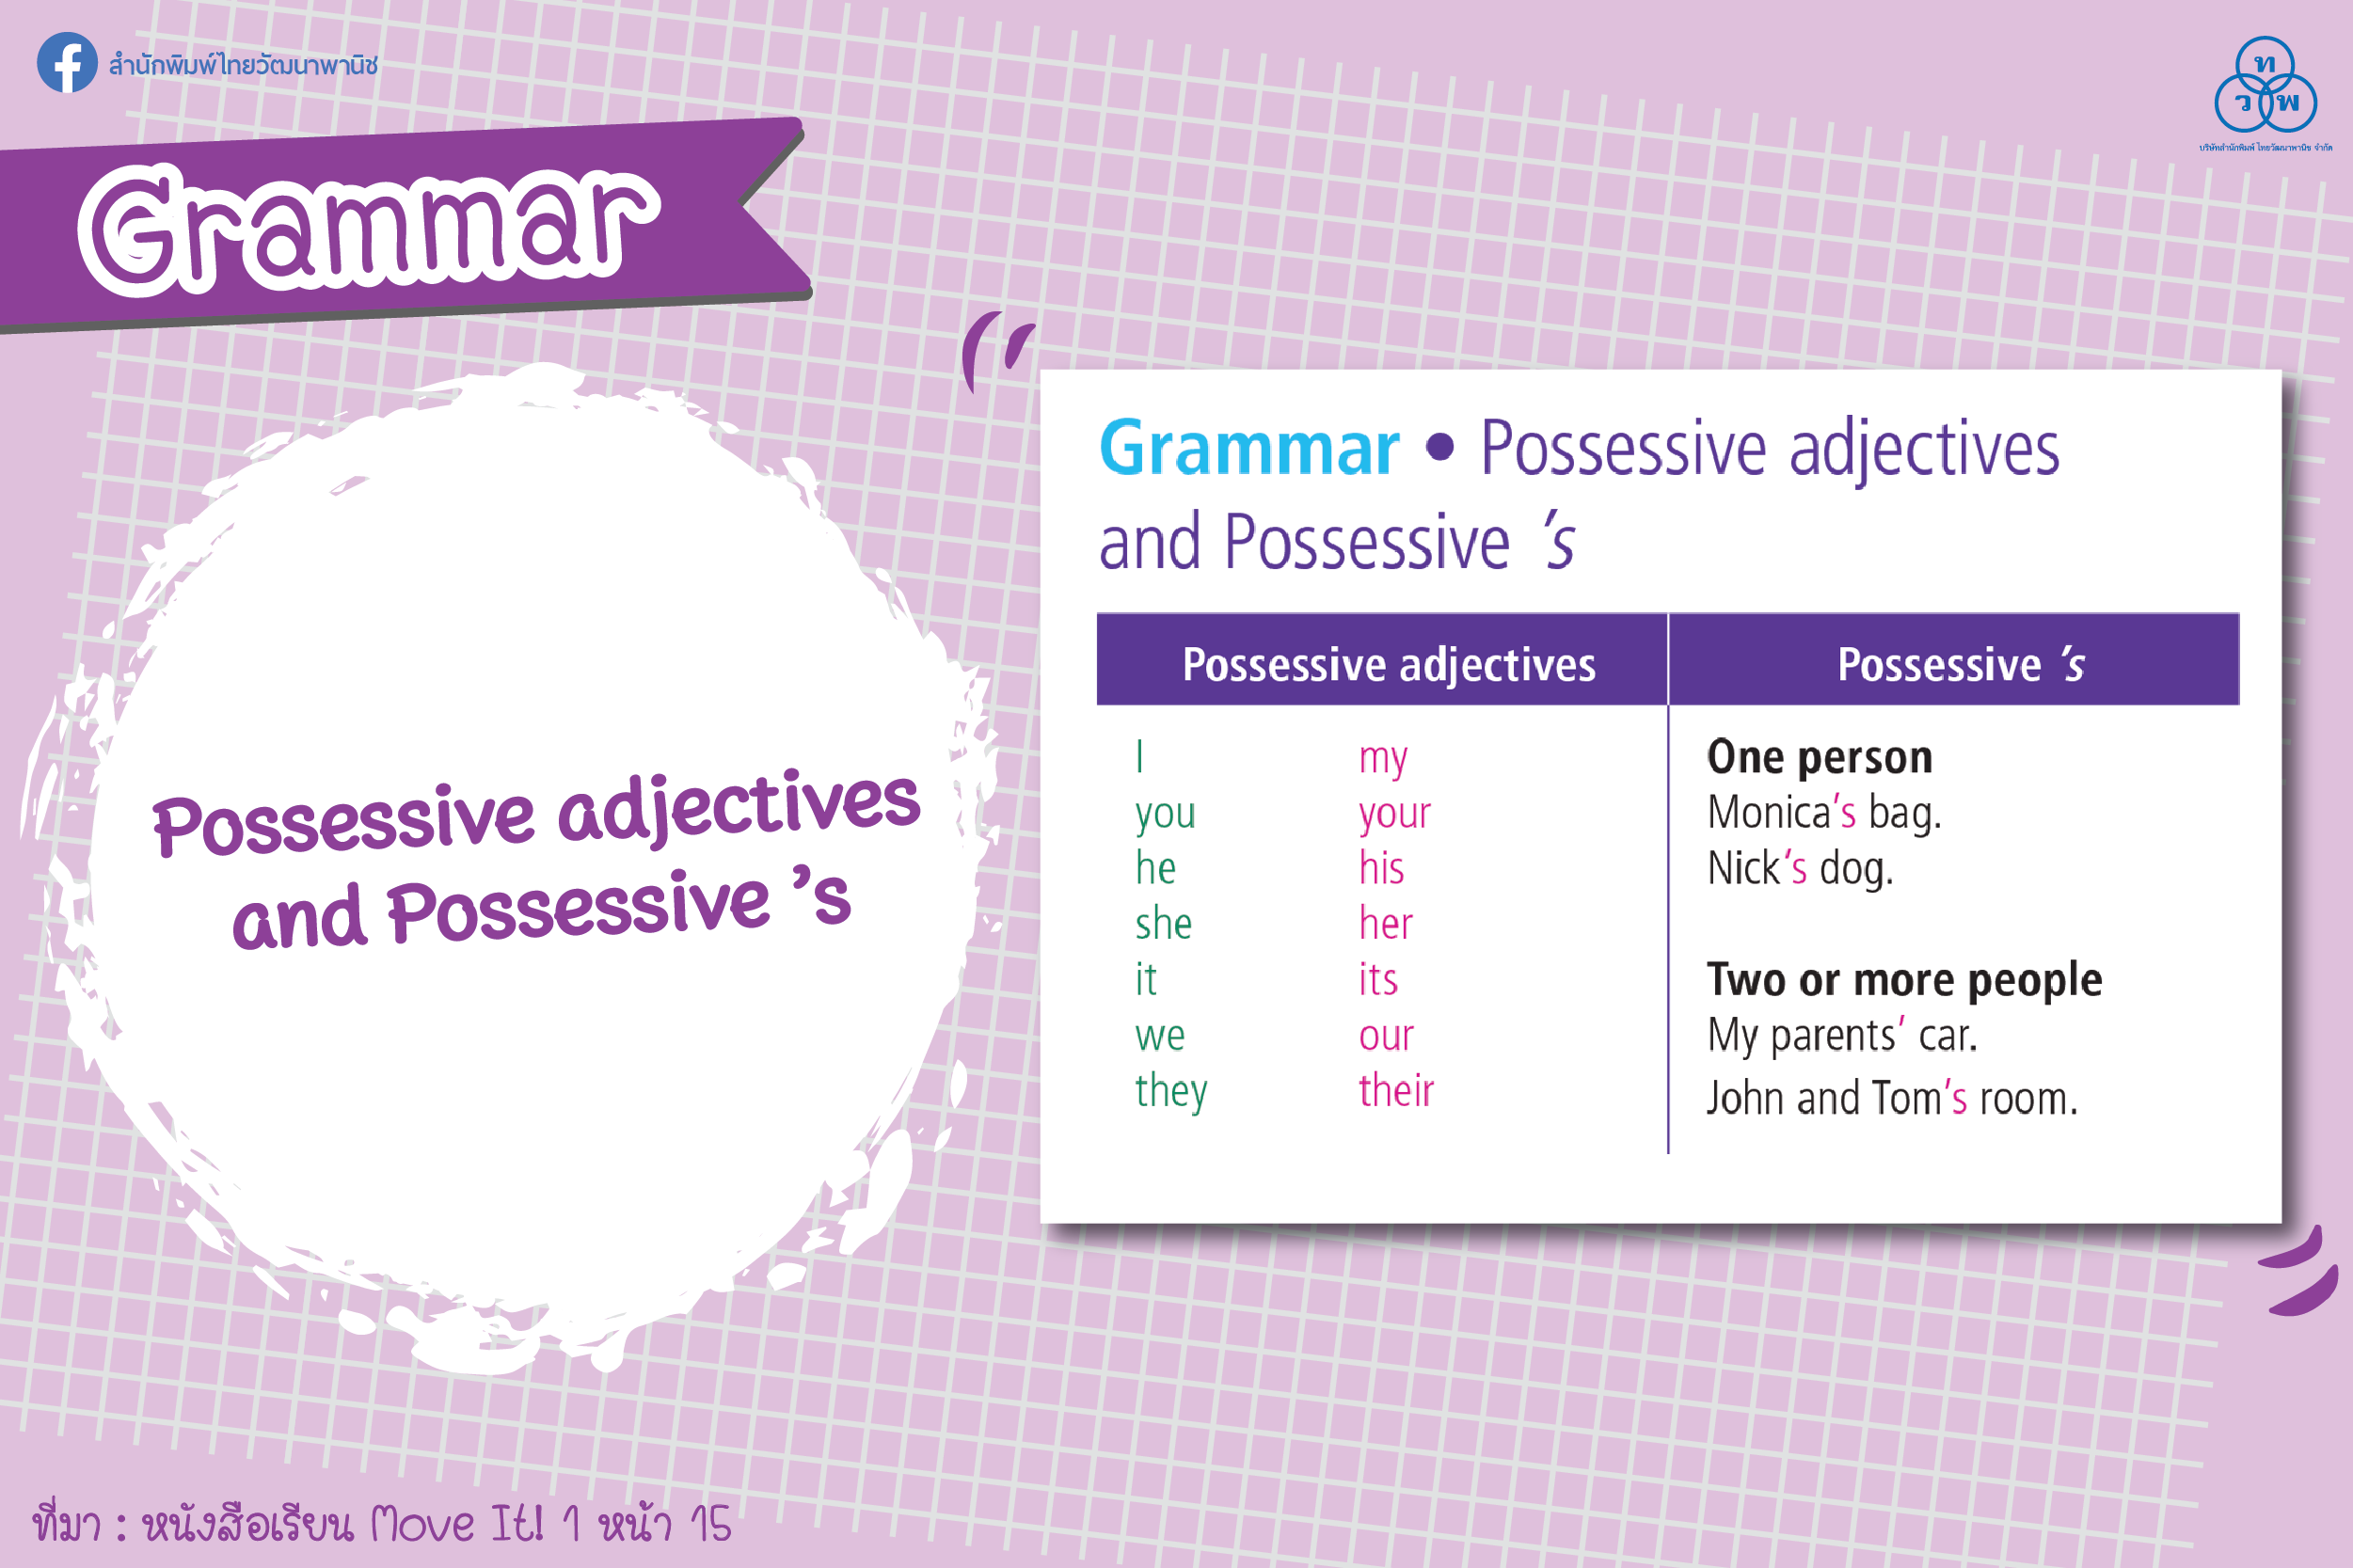 Grammar: Possessive adjectives and Possessive ’s